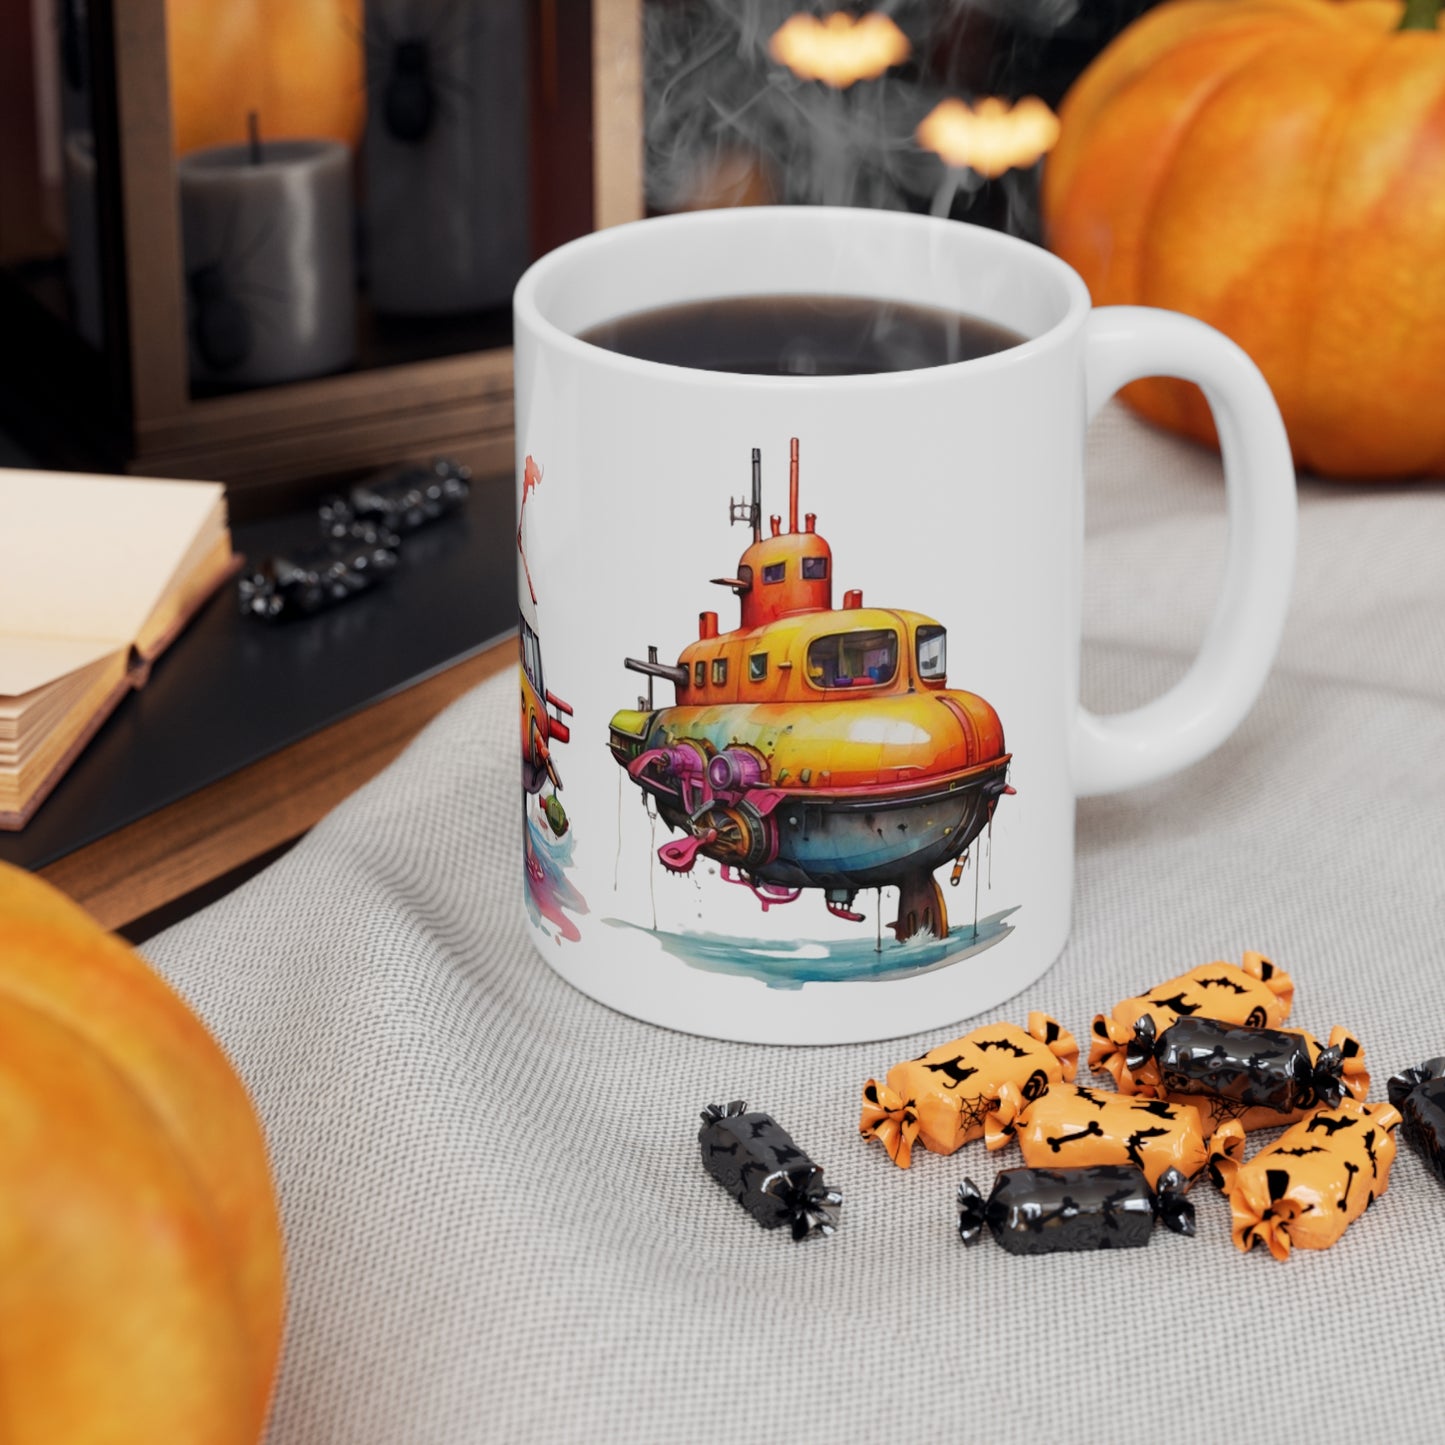 Colourful Submarines Mug - Ceramic Coffee Mug 11oz